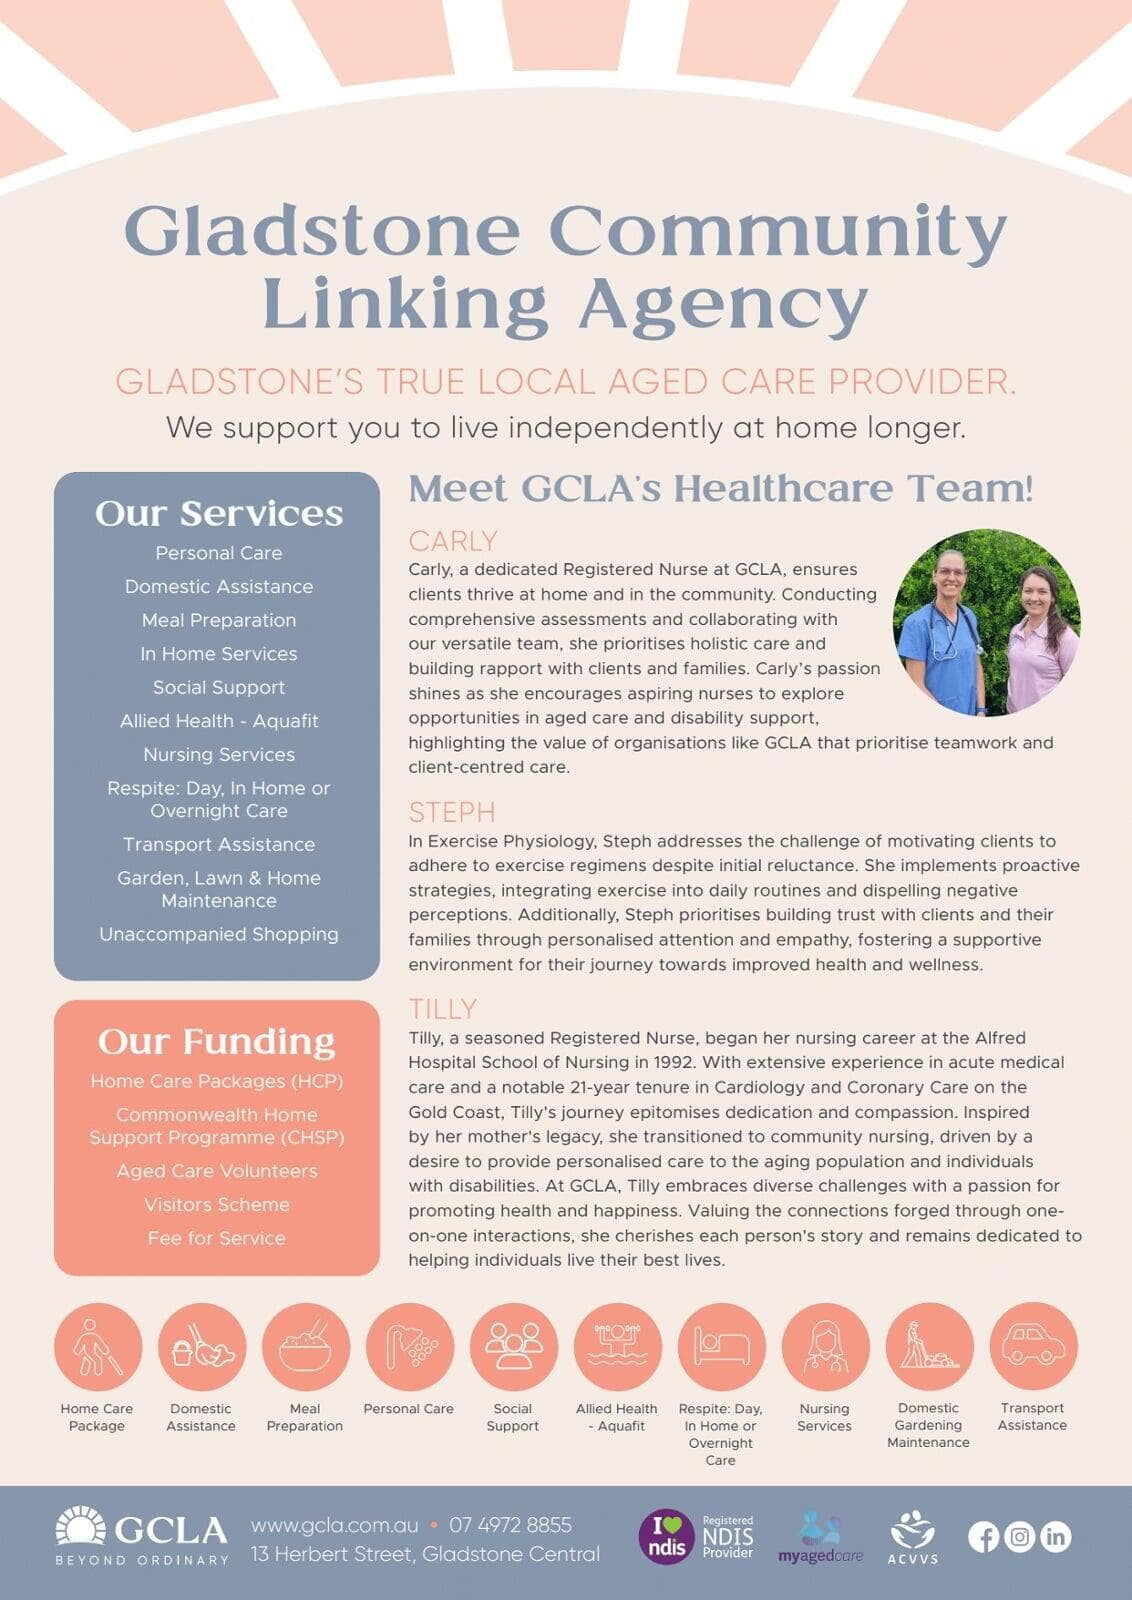 Gladstone Community Linking Agencies Healthcare Team!